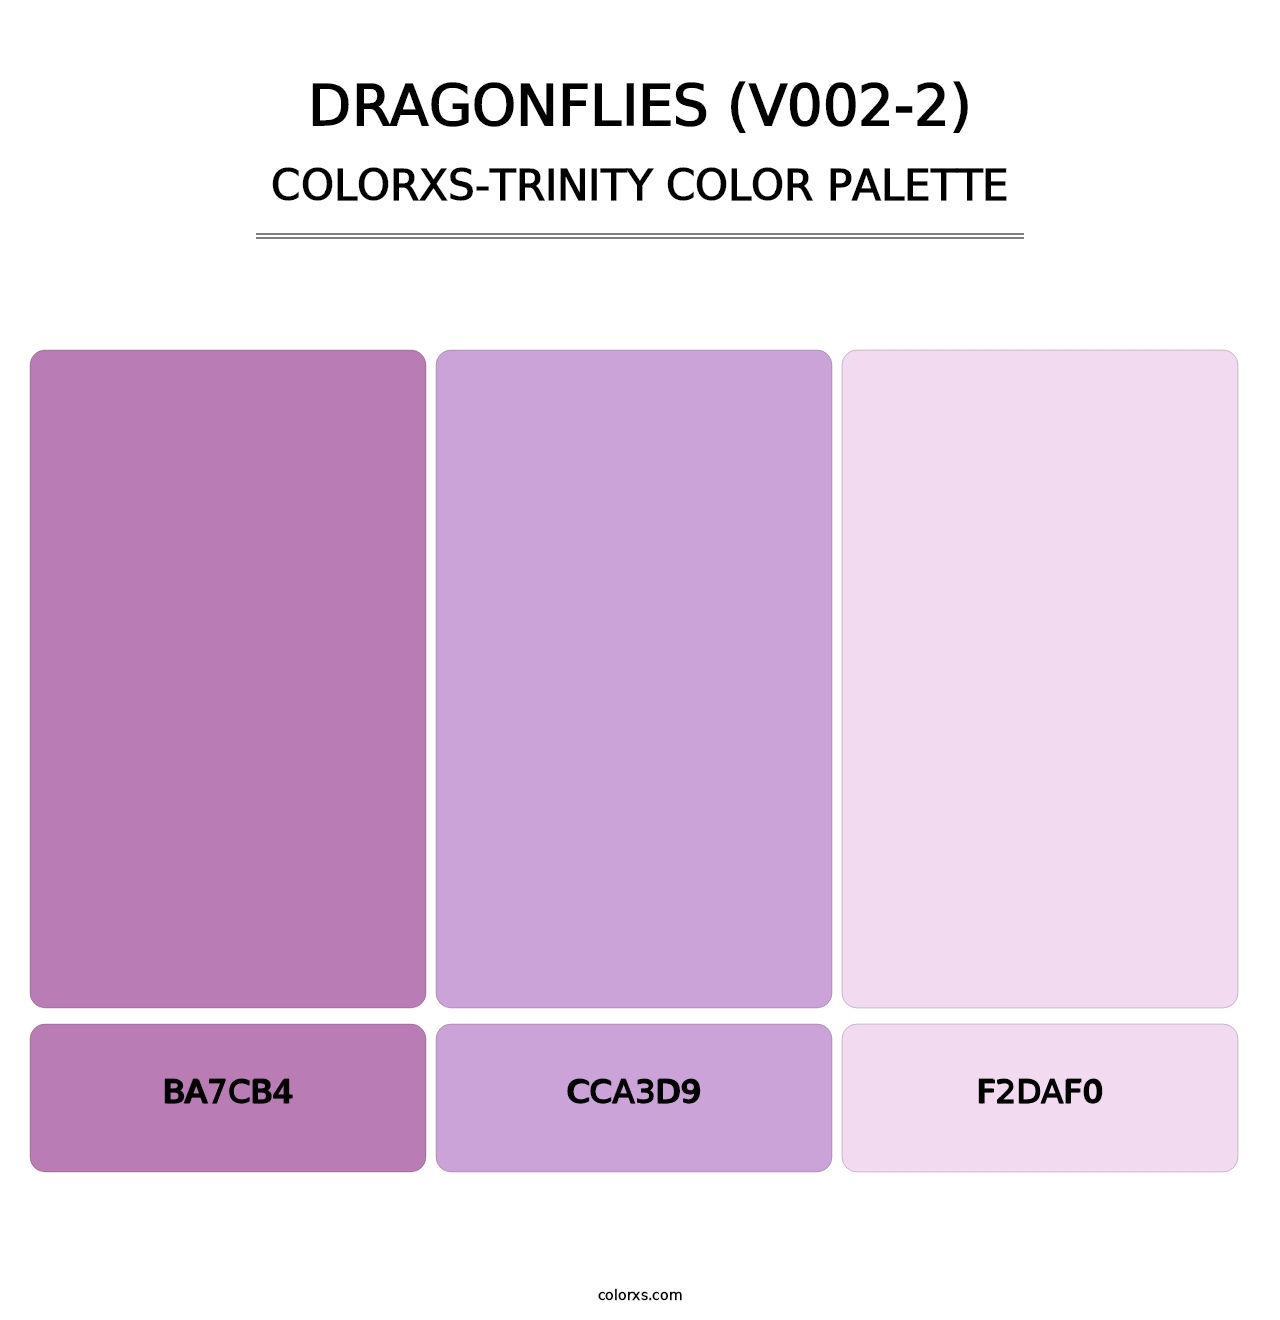 Dragonflies (V002-2) - Colorxs Trinity Palette